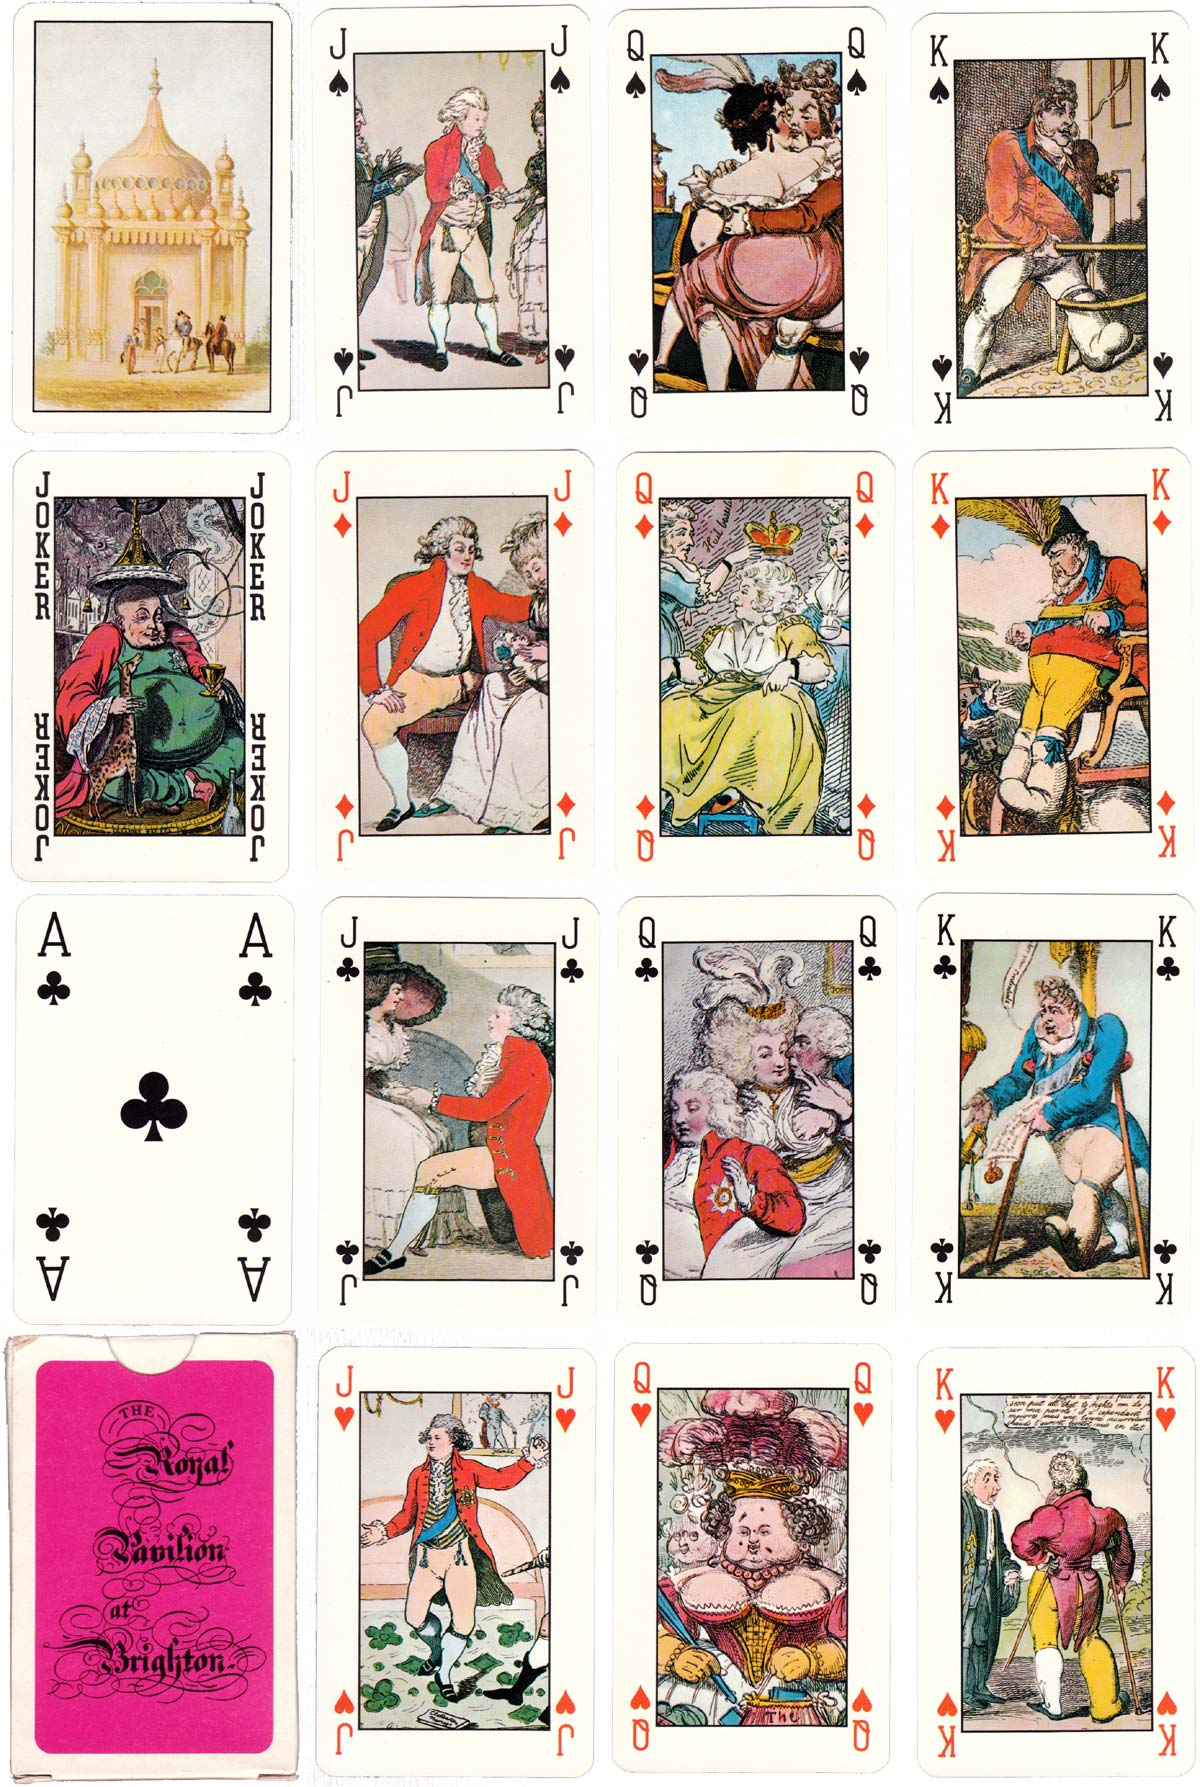 The Royal Pavilion at Brighton playing cards